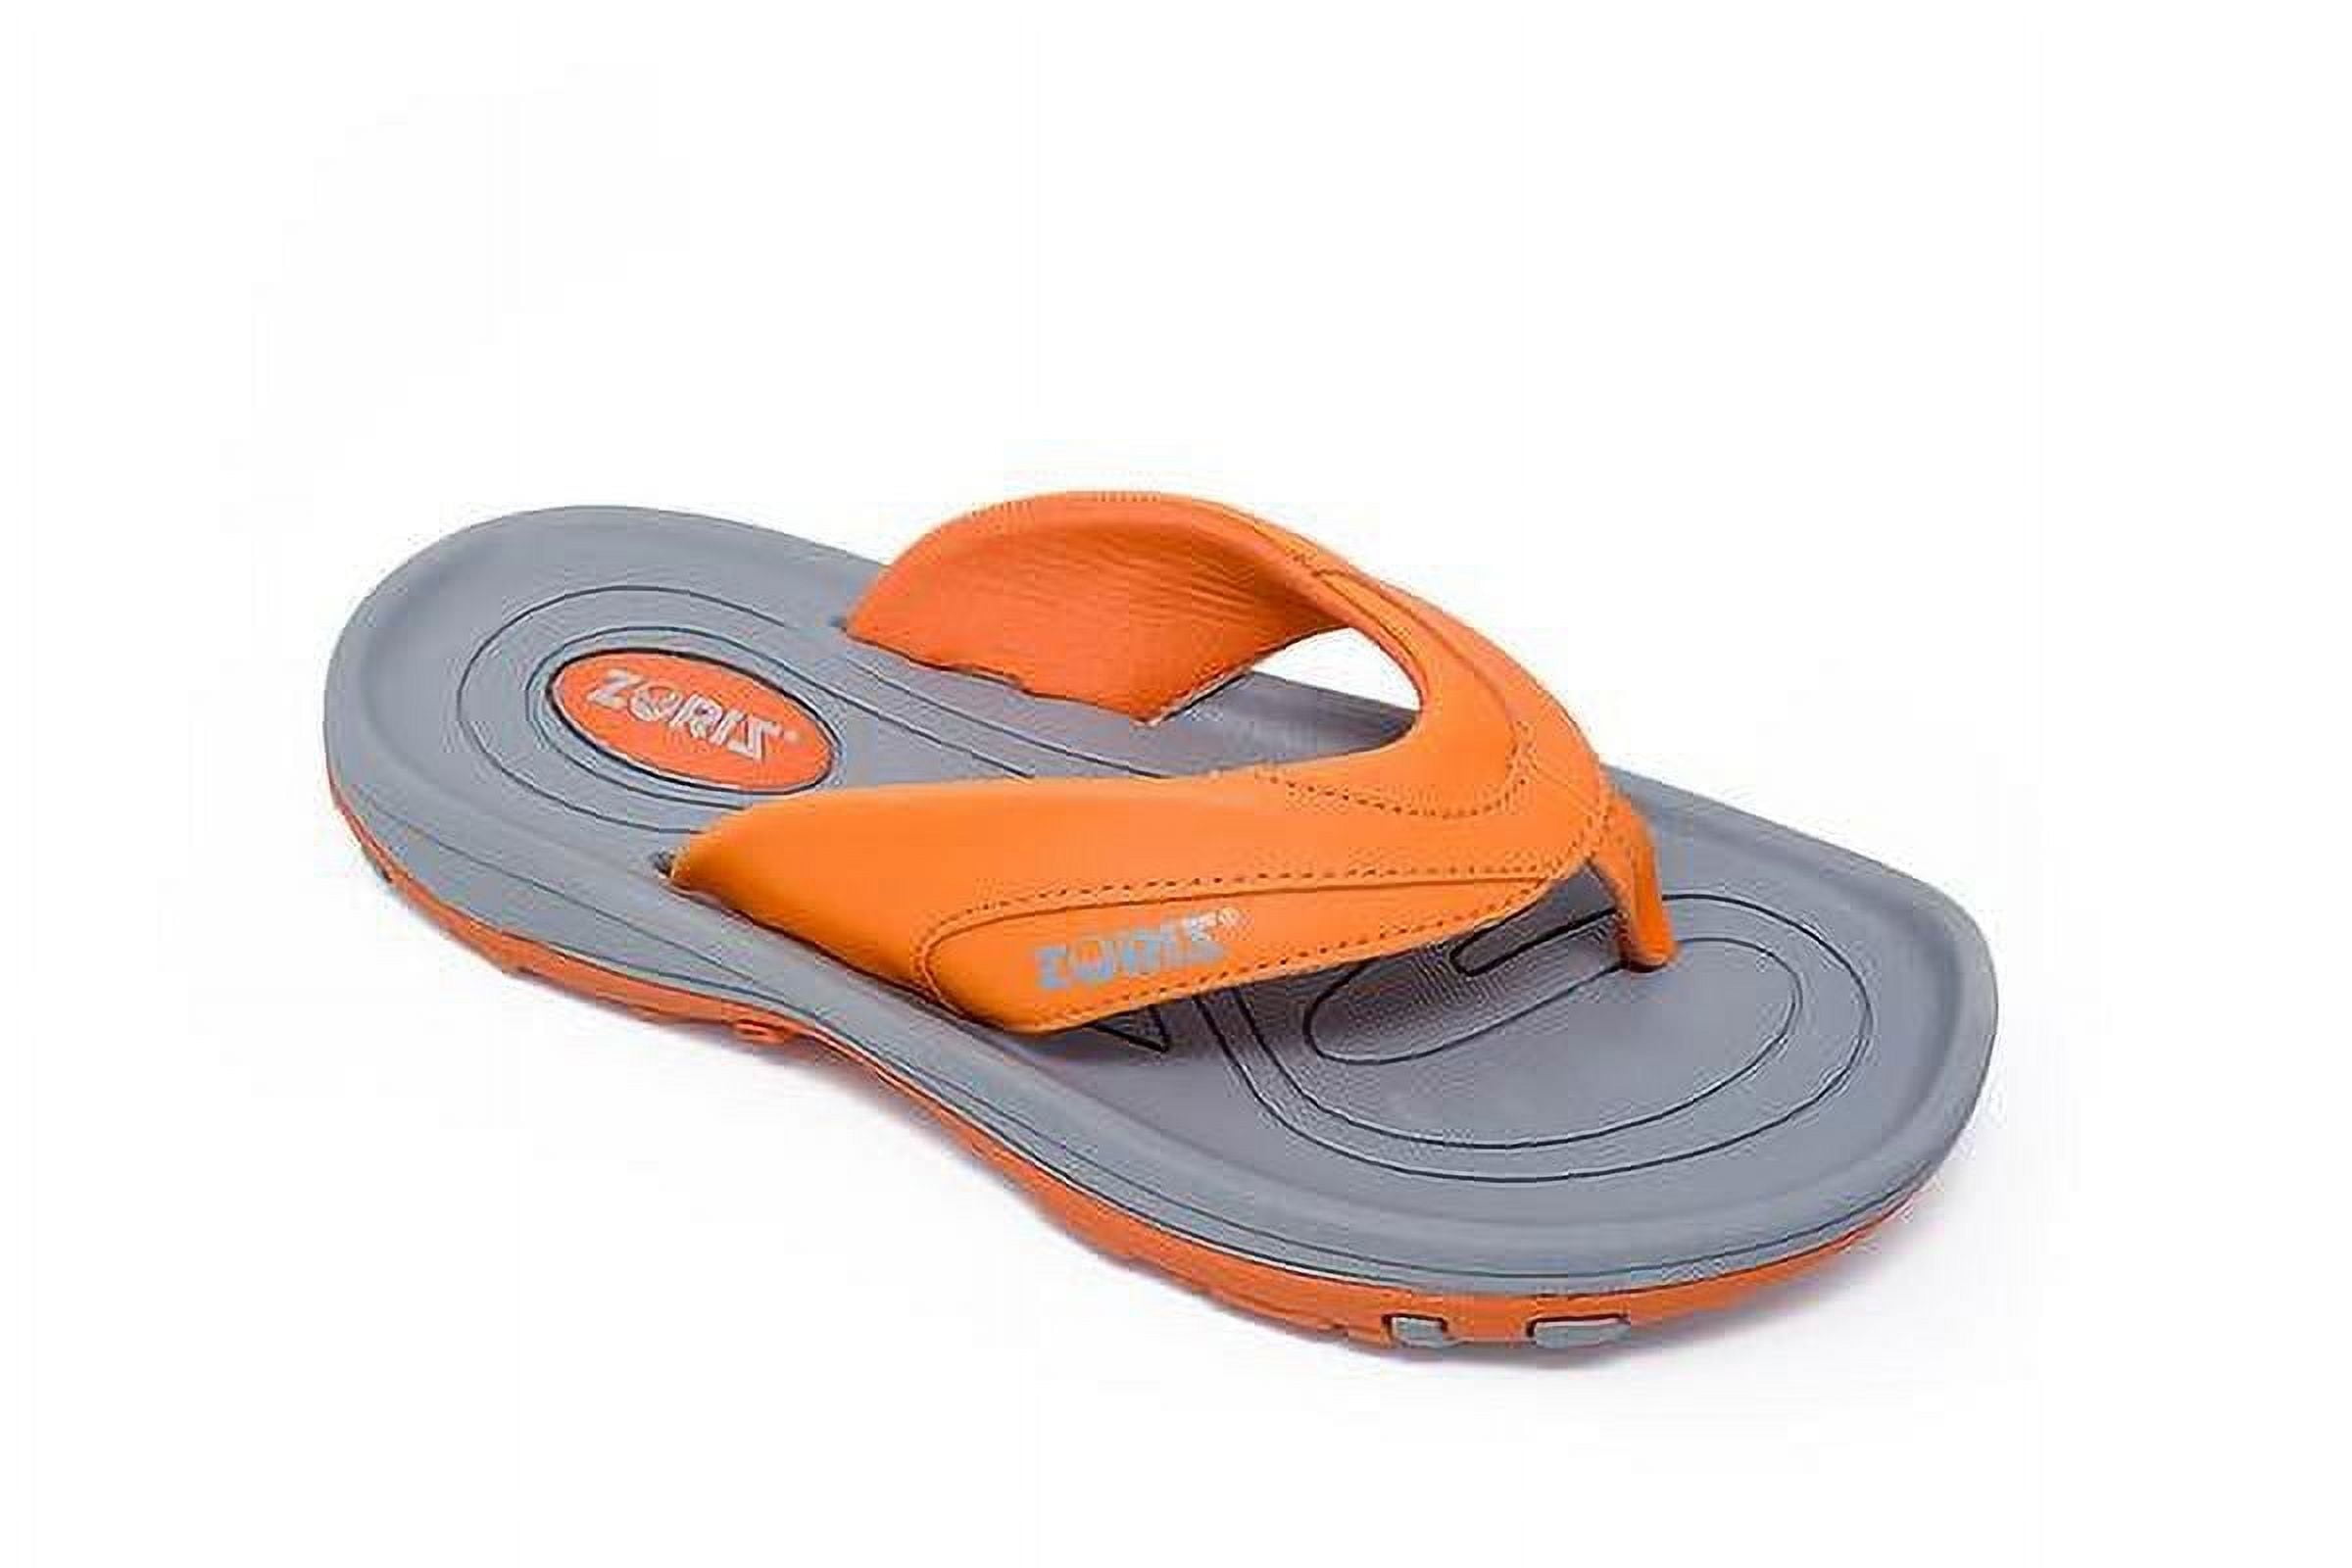 ZORIZ Golf Sandals Women Men Thong Flip Flops With Removable Soft Spikes Footwear Deeper Heel Cup Higher Sidewalls Secure Comfort Orange Men s 13 5faab9d8 ed96 4343 8235 764a603cdfa1.72c885ccae20c01f4eeaf7cc3ff08d07